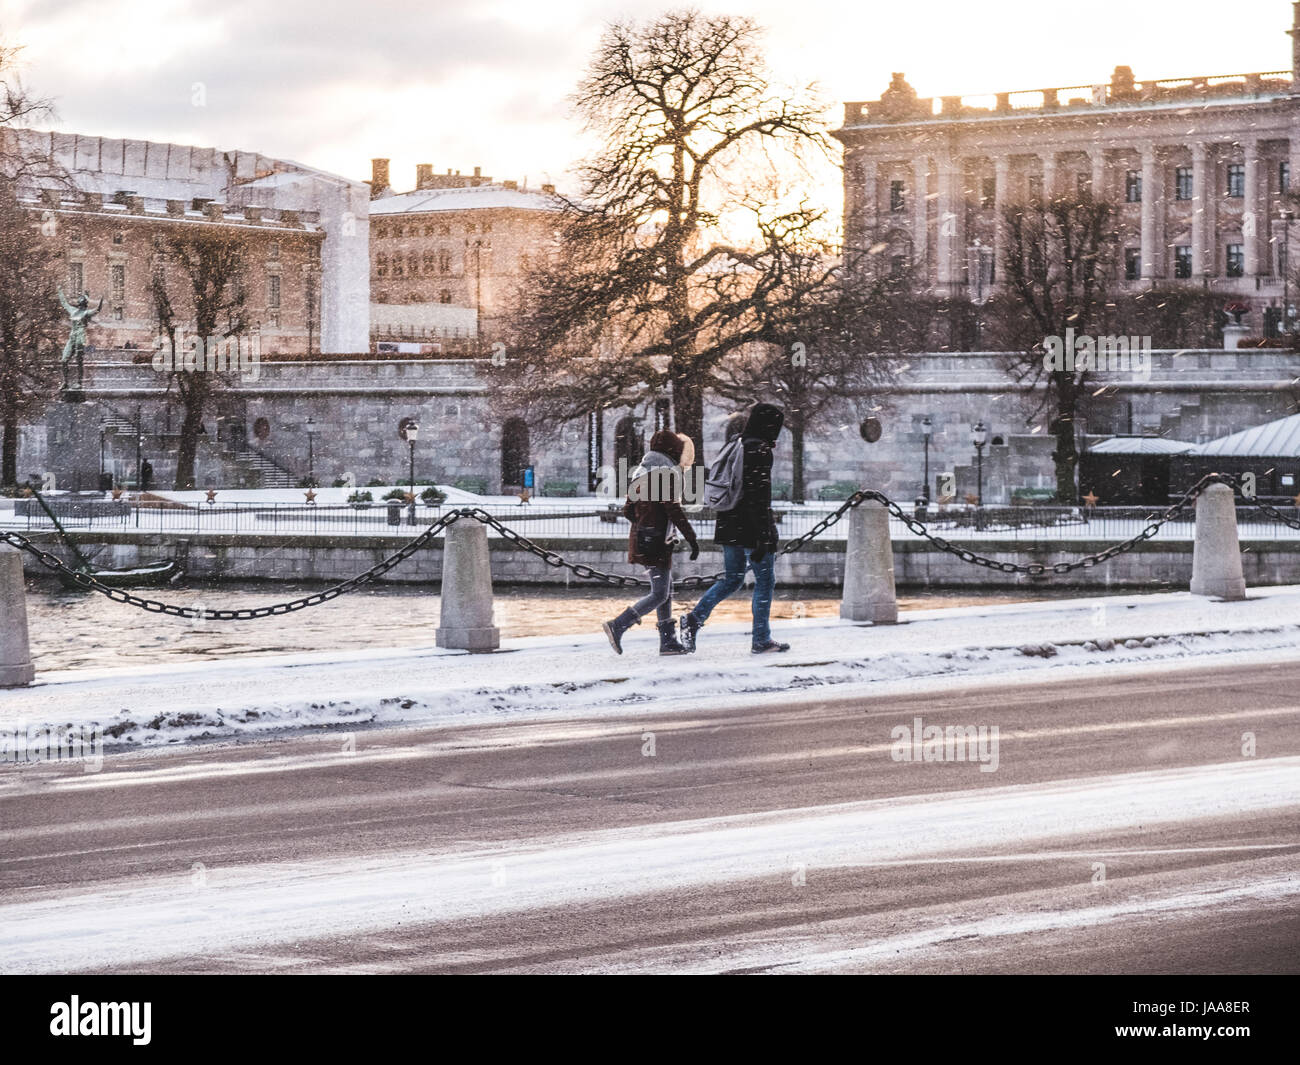 La Suède, Stockholm, stoccolmasweden rues photo : Cronos/alessandro bosio Banque D'Images